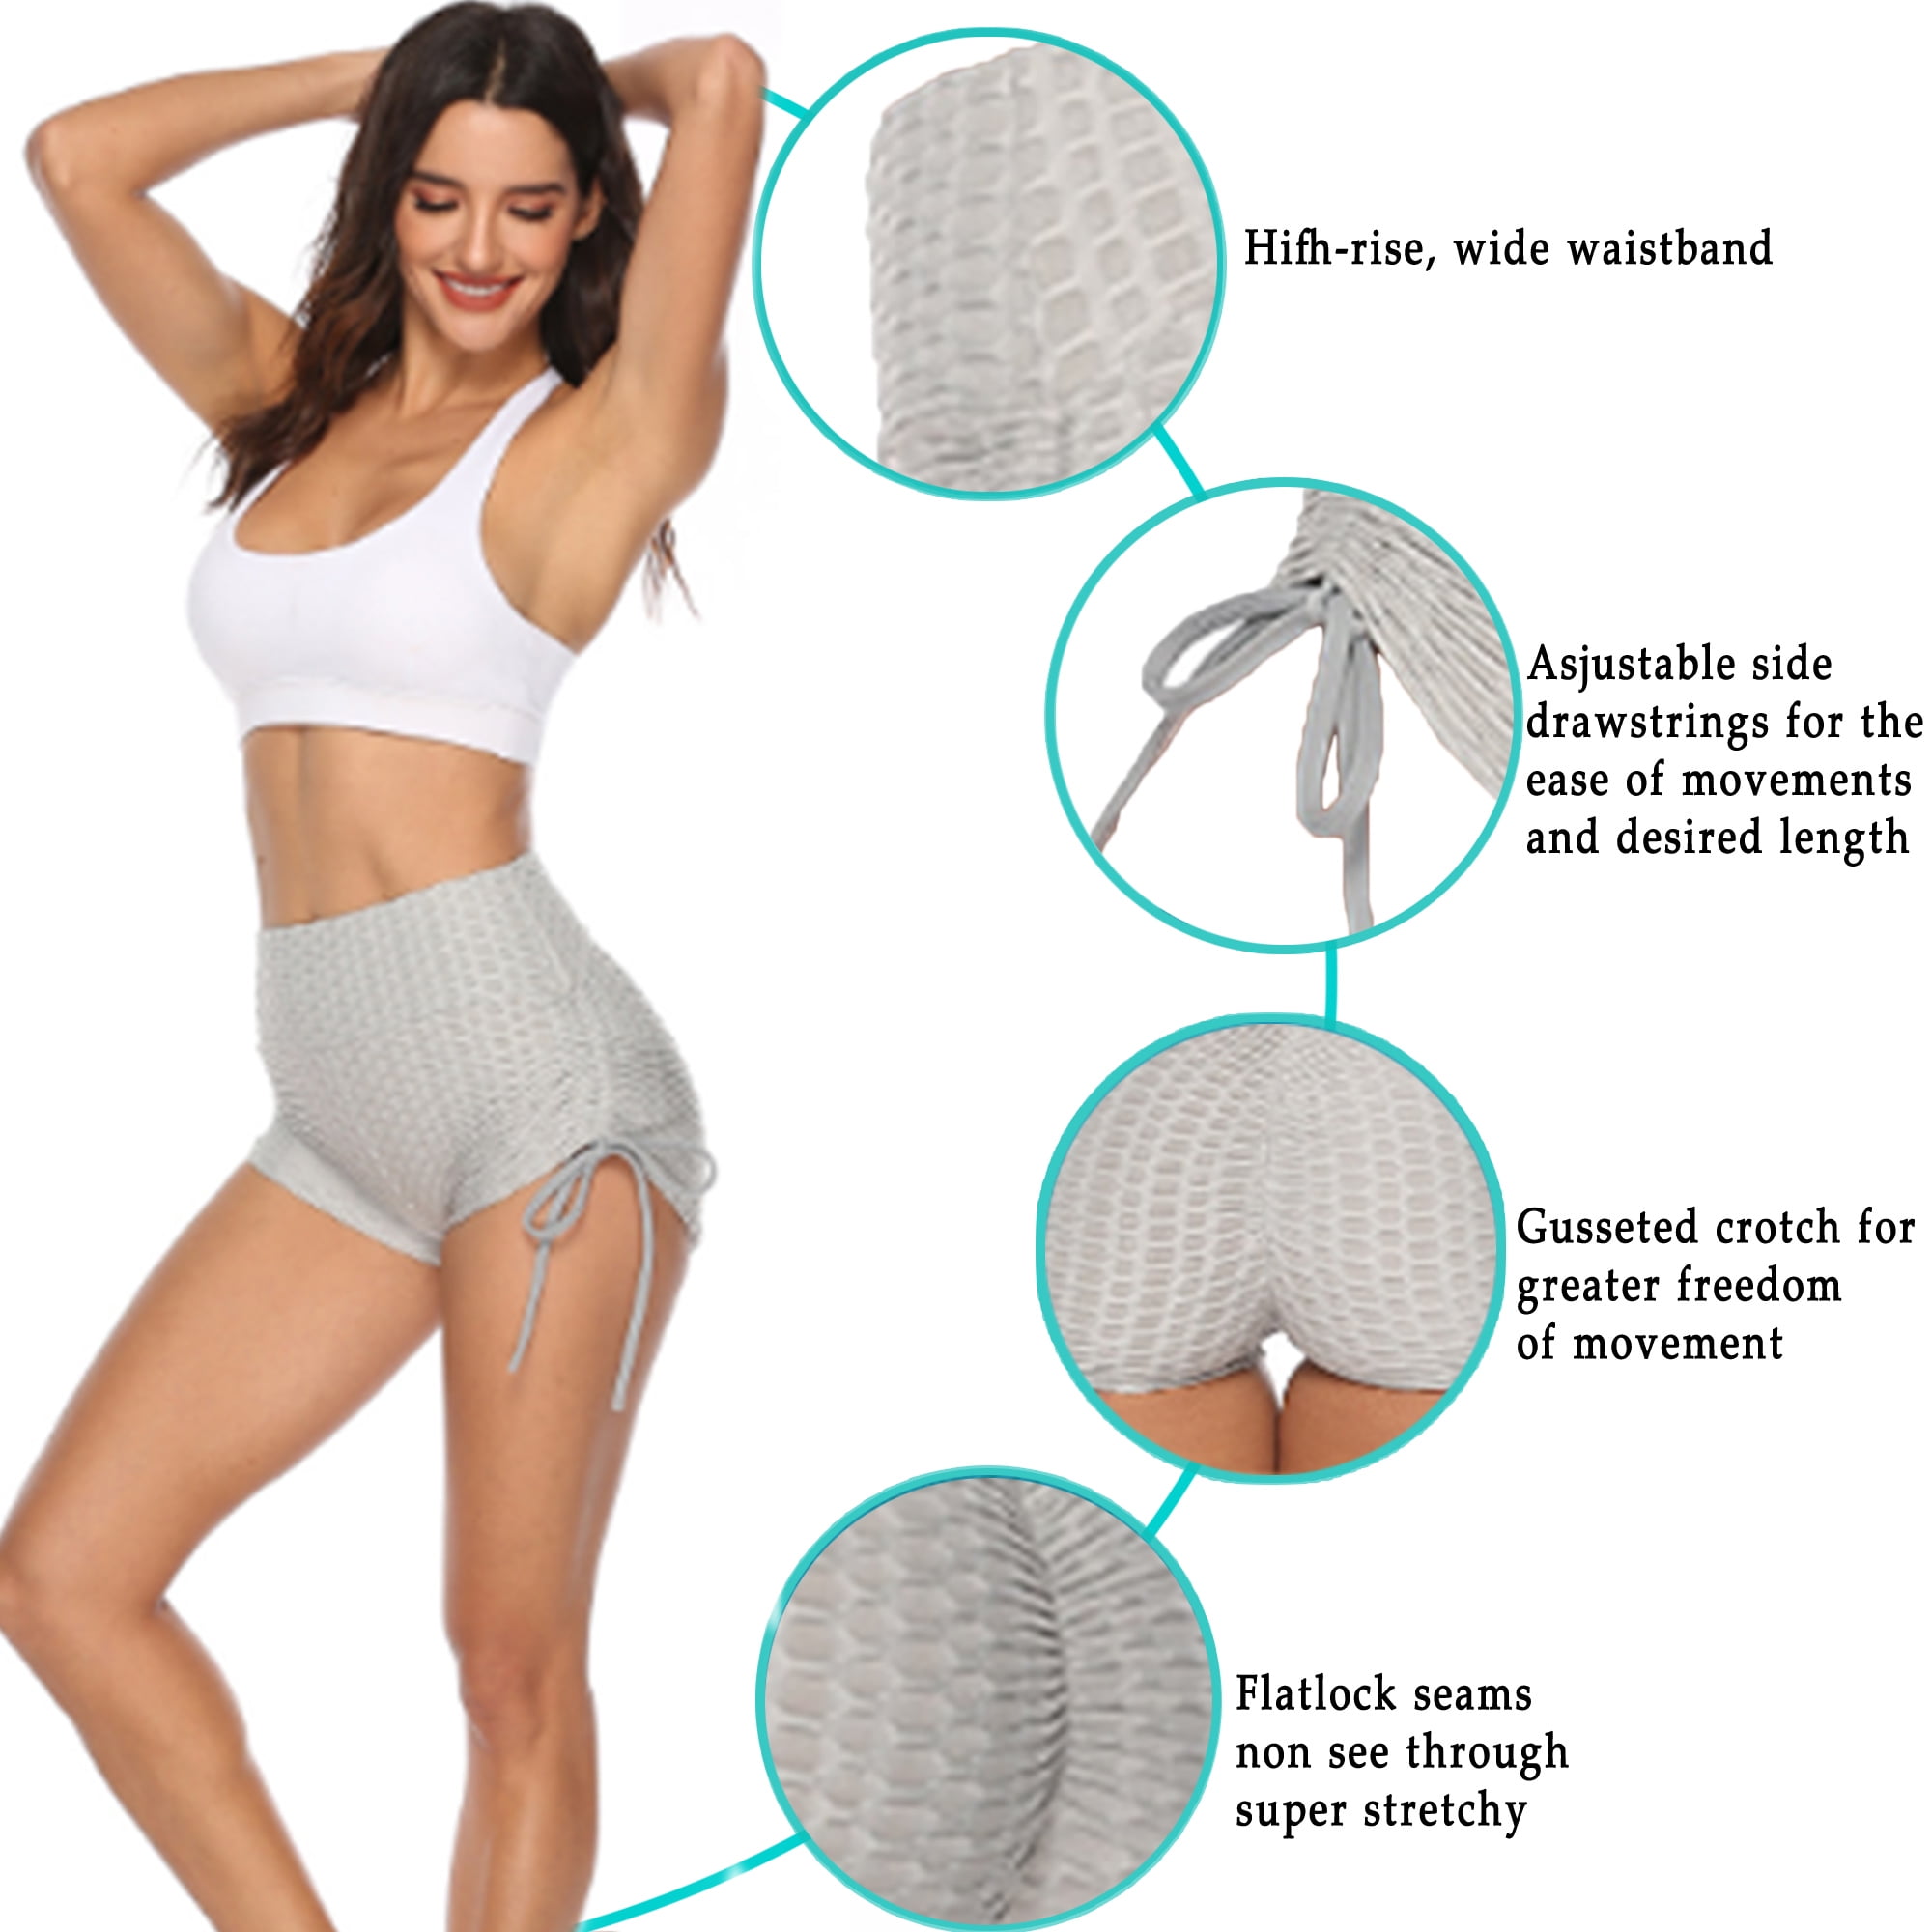 DODOING Yoga Hot Shorts for Women Tummy Control Workout Shorts